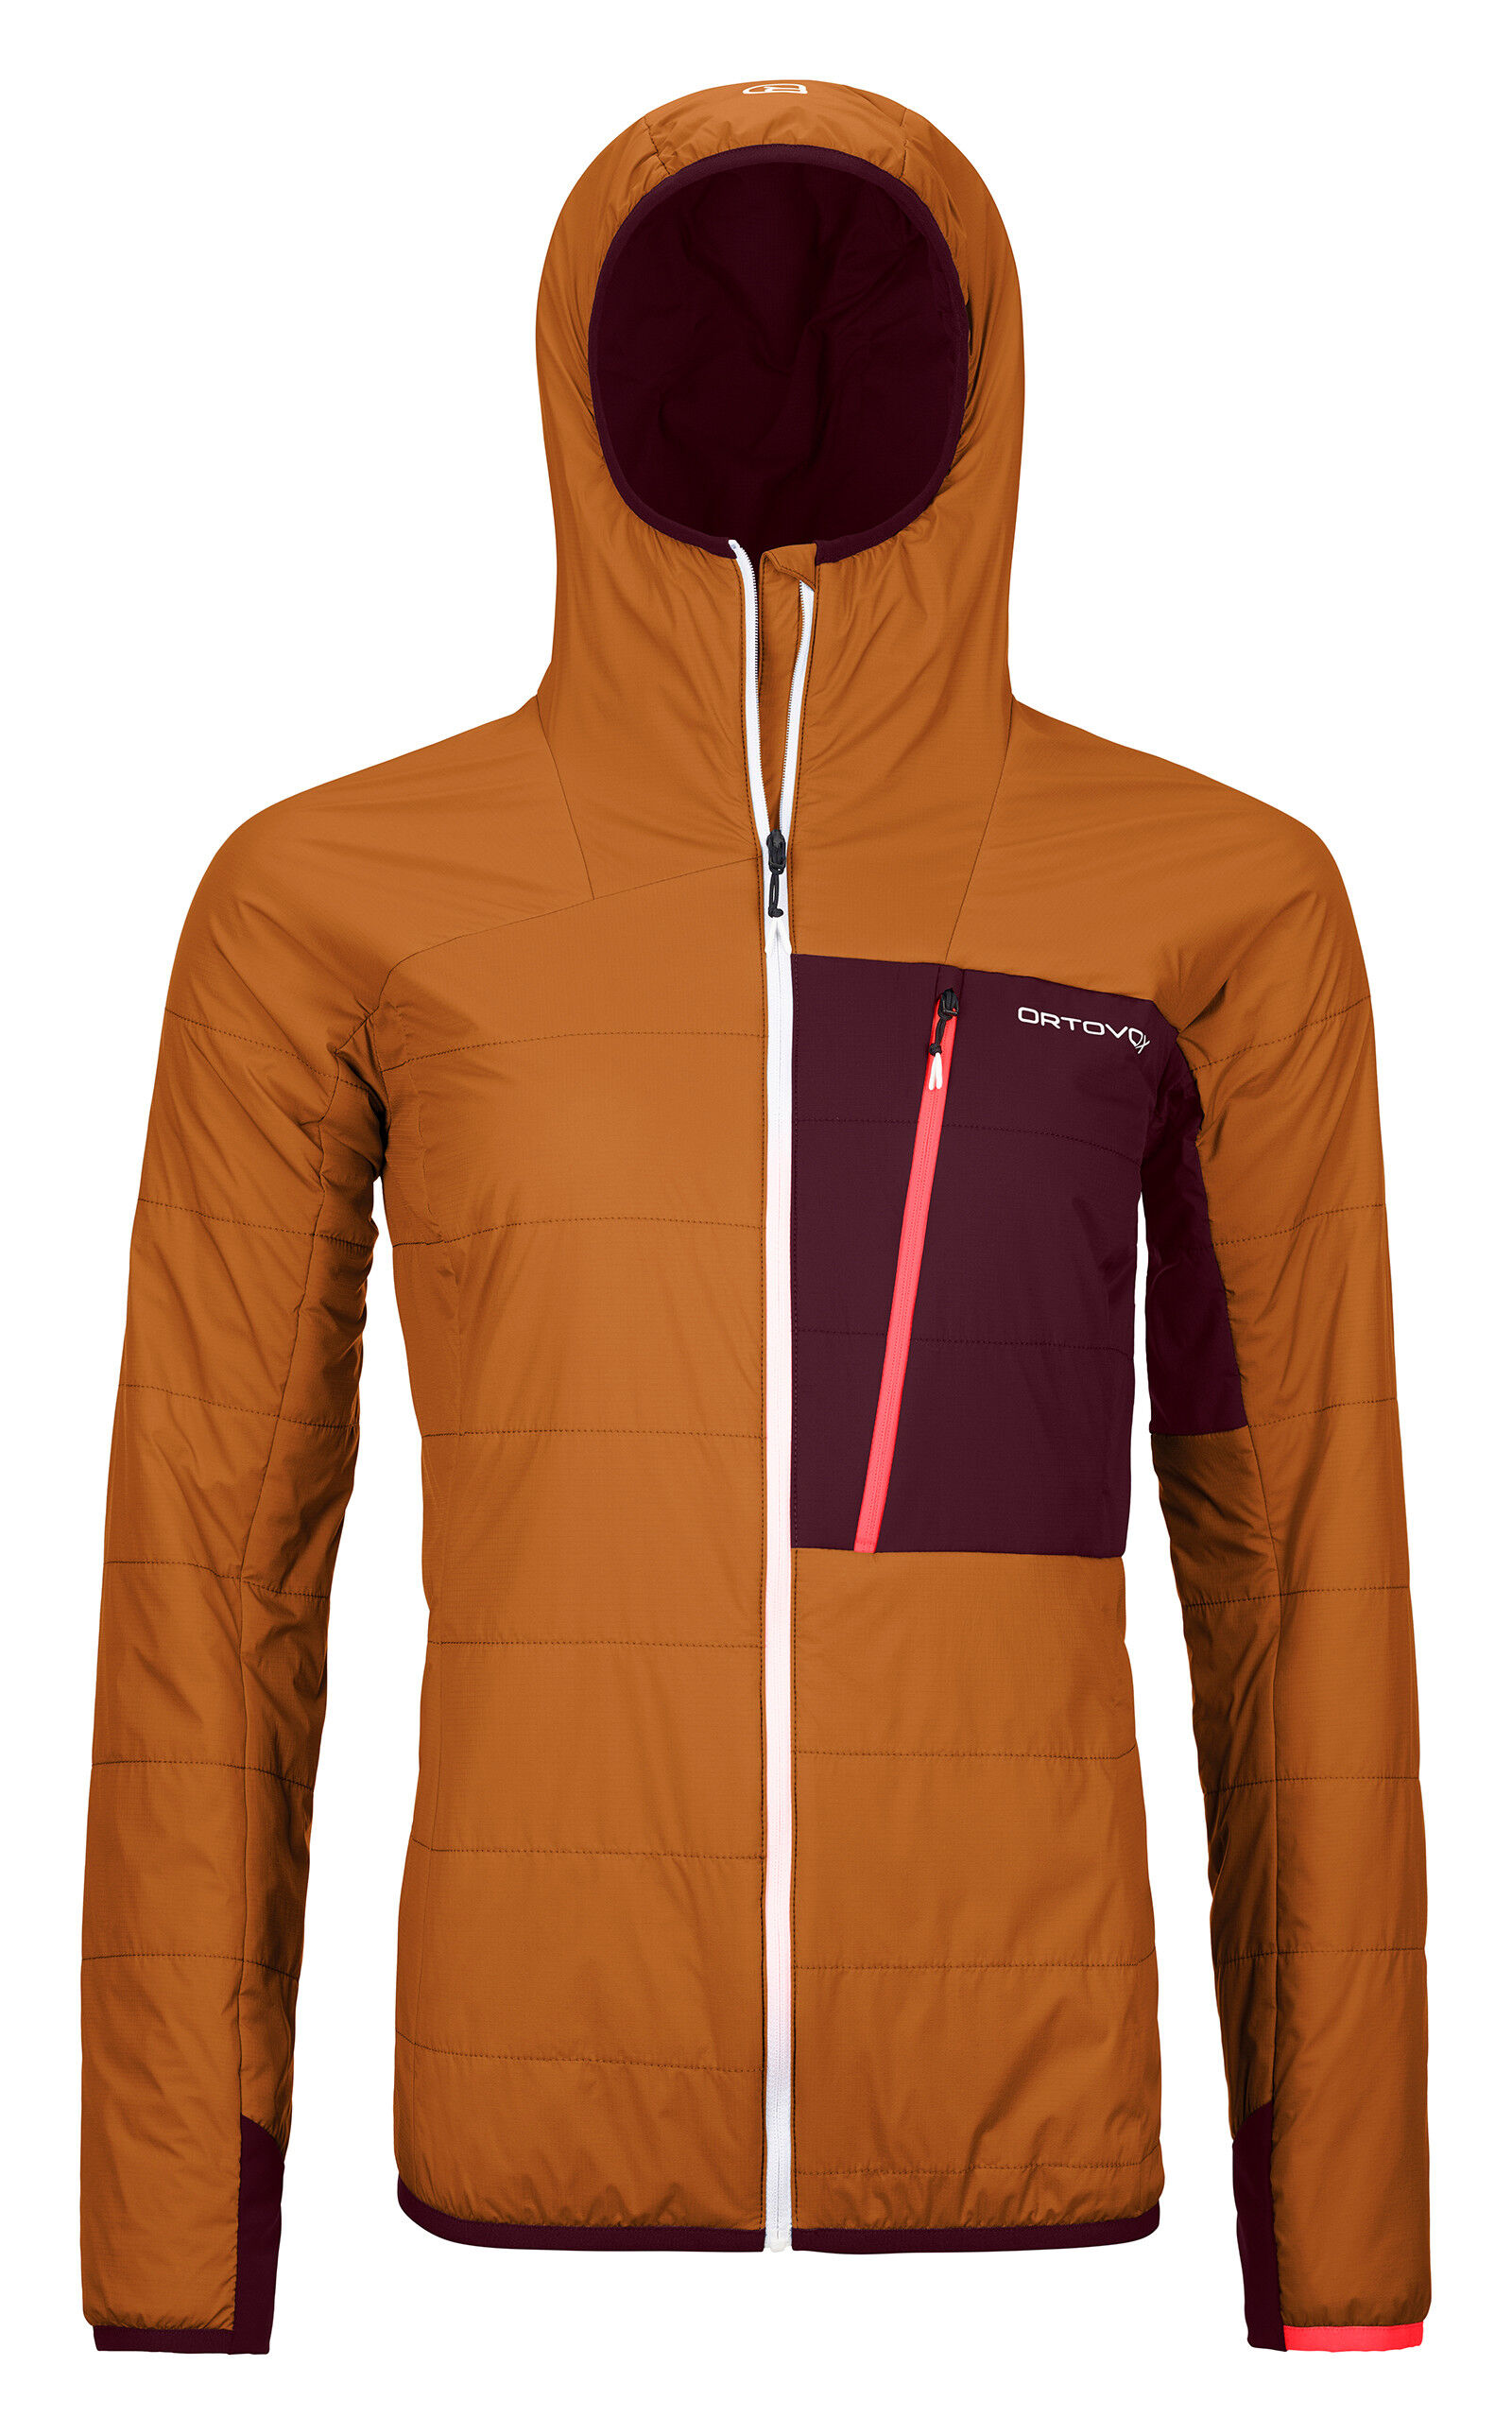 Ortovox Swisswool Piz Duan Jacket - Synthetic jacket - Women's